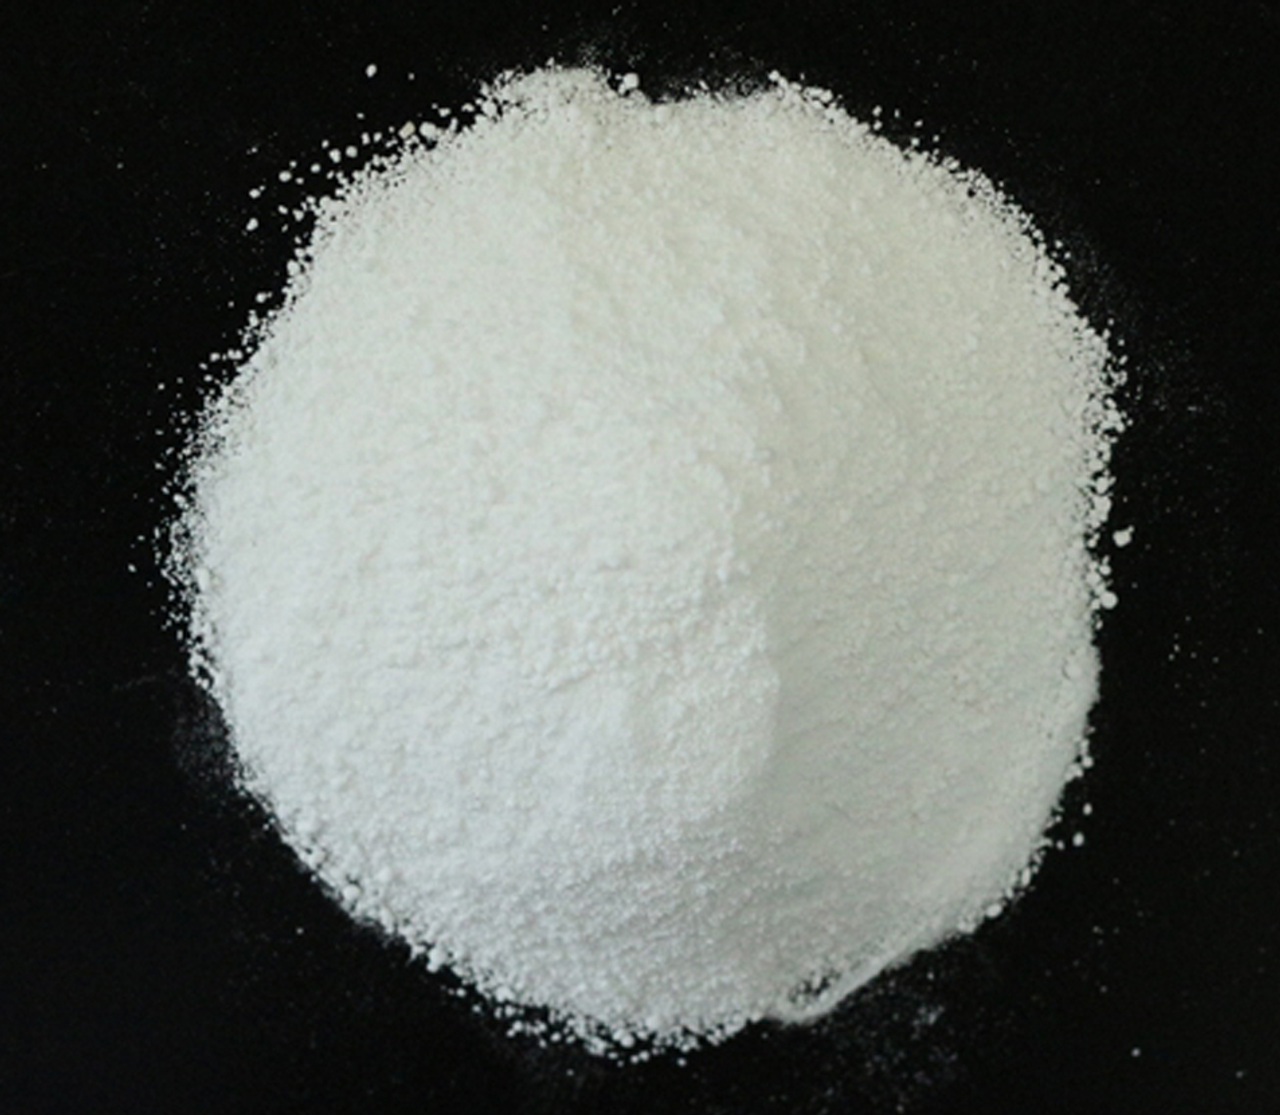 Florida Laboratories Boric Acid Granular Powder 2 Lb. Create Your own  Solution - Yahoo Shopping